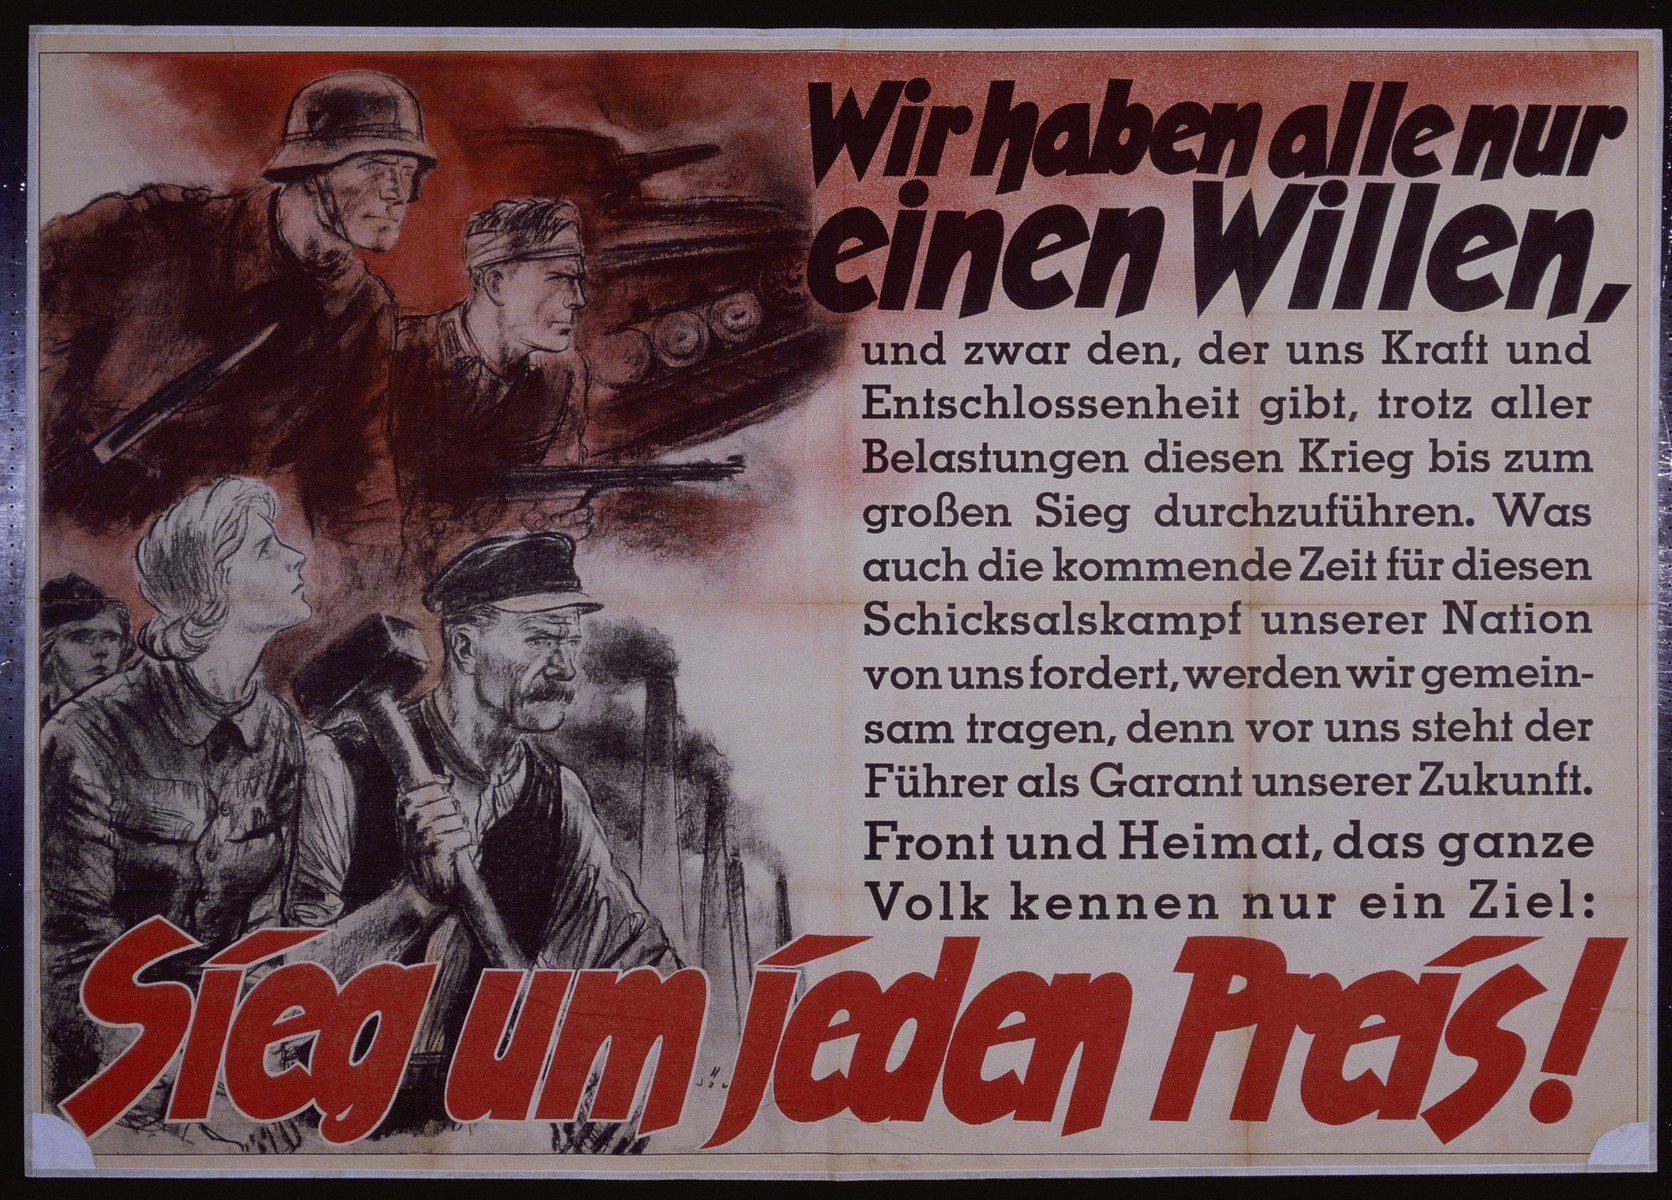 Nazi propaganda poster entitled, "Wir haben alle nur einen Willen,"  issued by the "Parole der Woche," a wall newspaper (Wandzeitung) published by the National Socialist Party propaganda office in Munich.